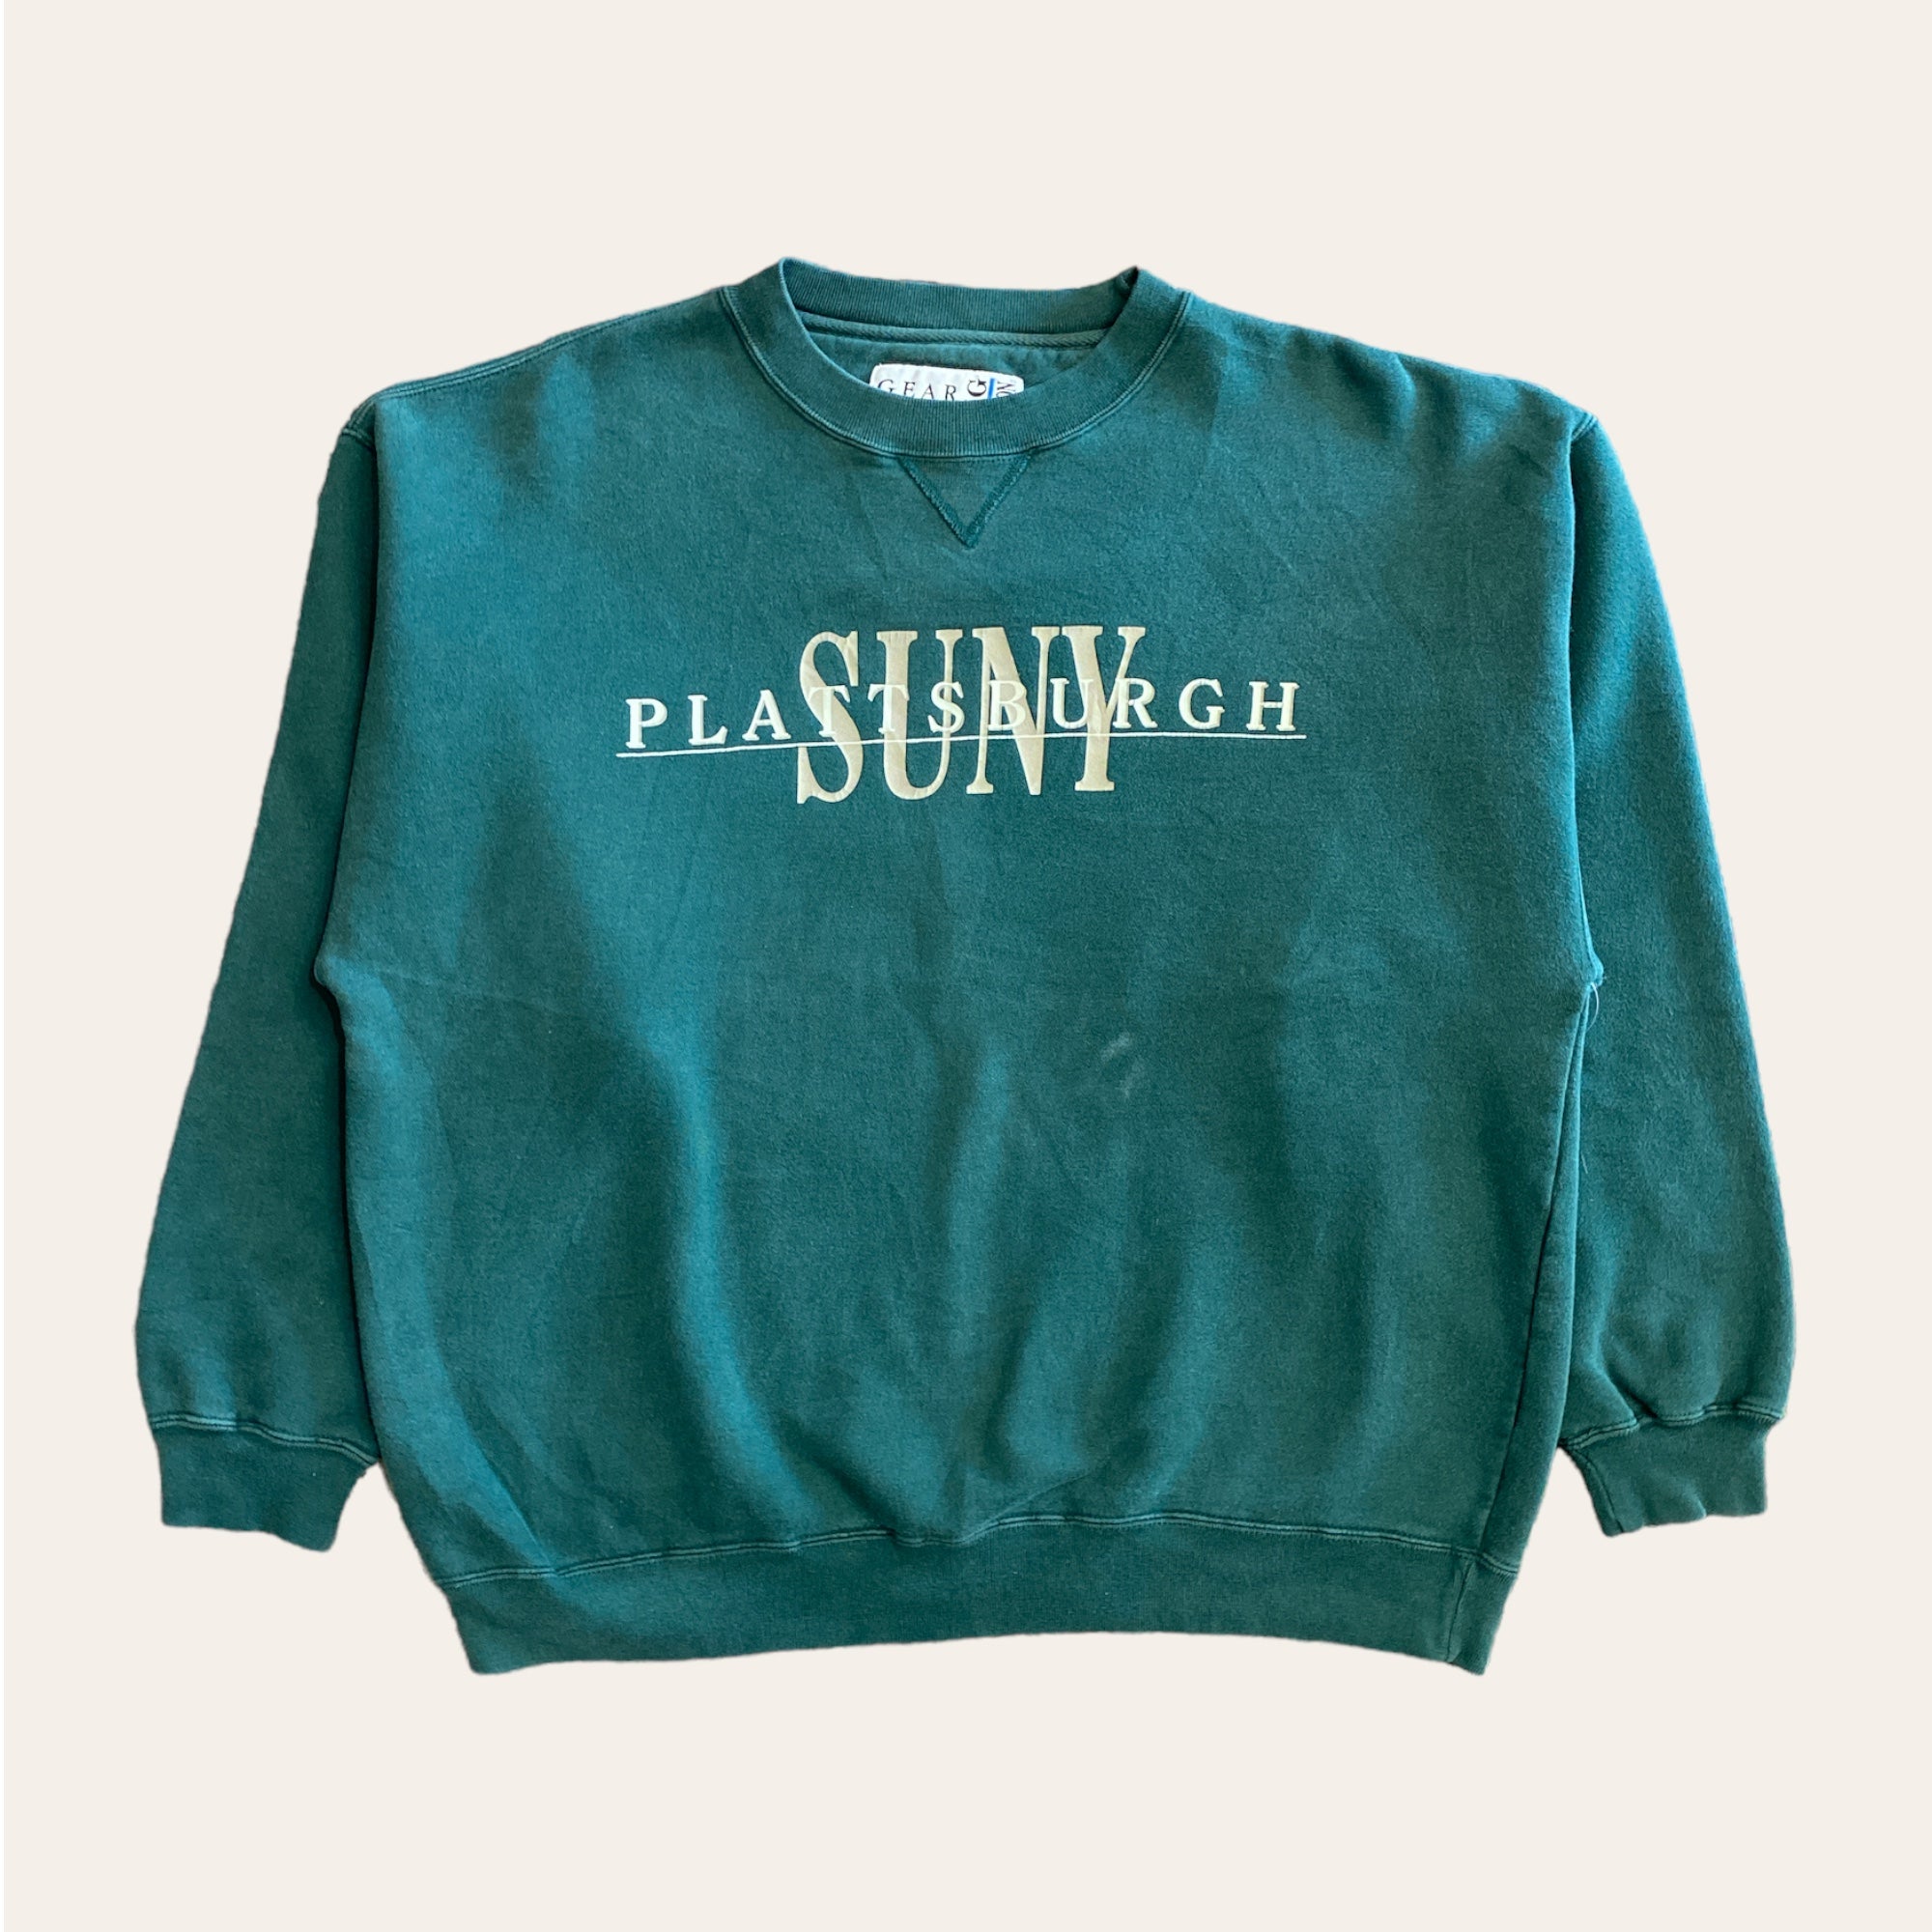 Vintage Plattsburgh Sweater Size L